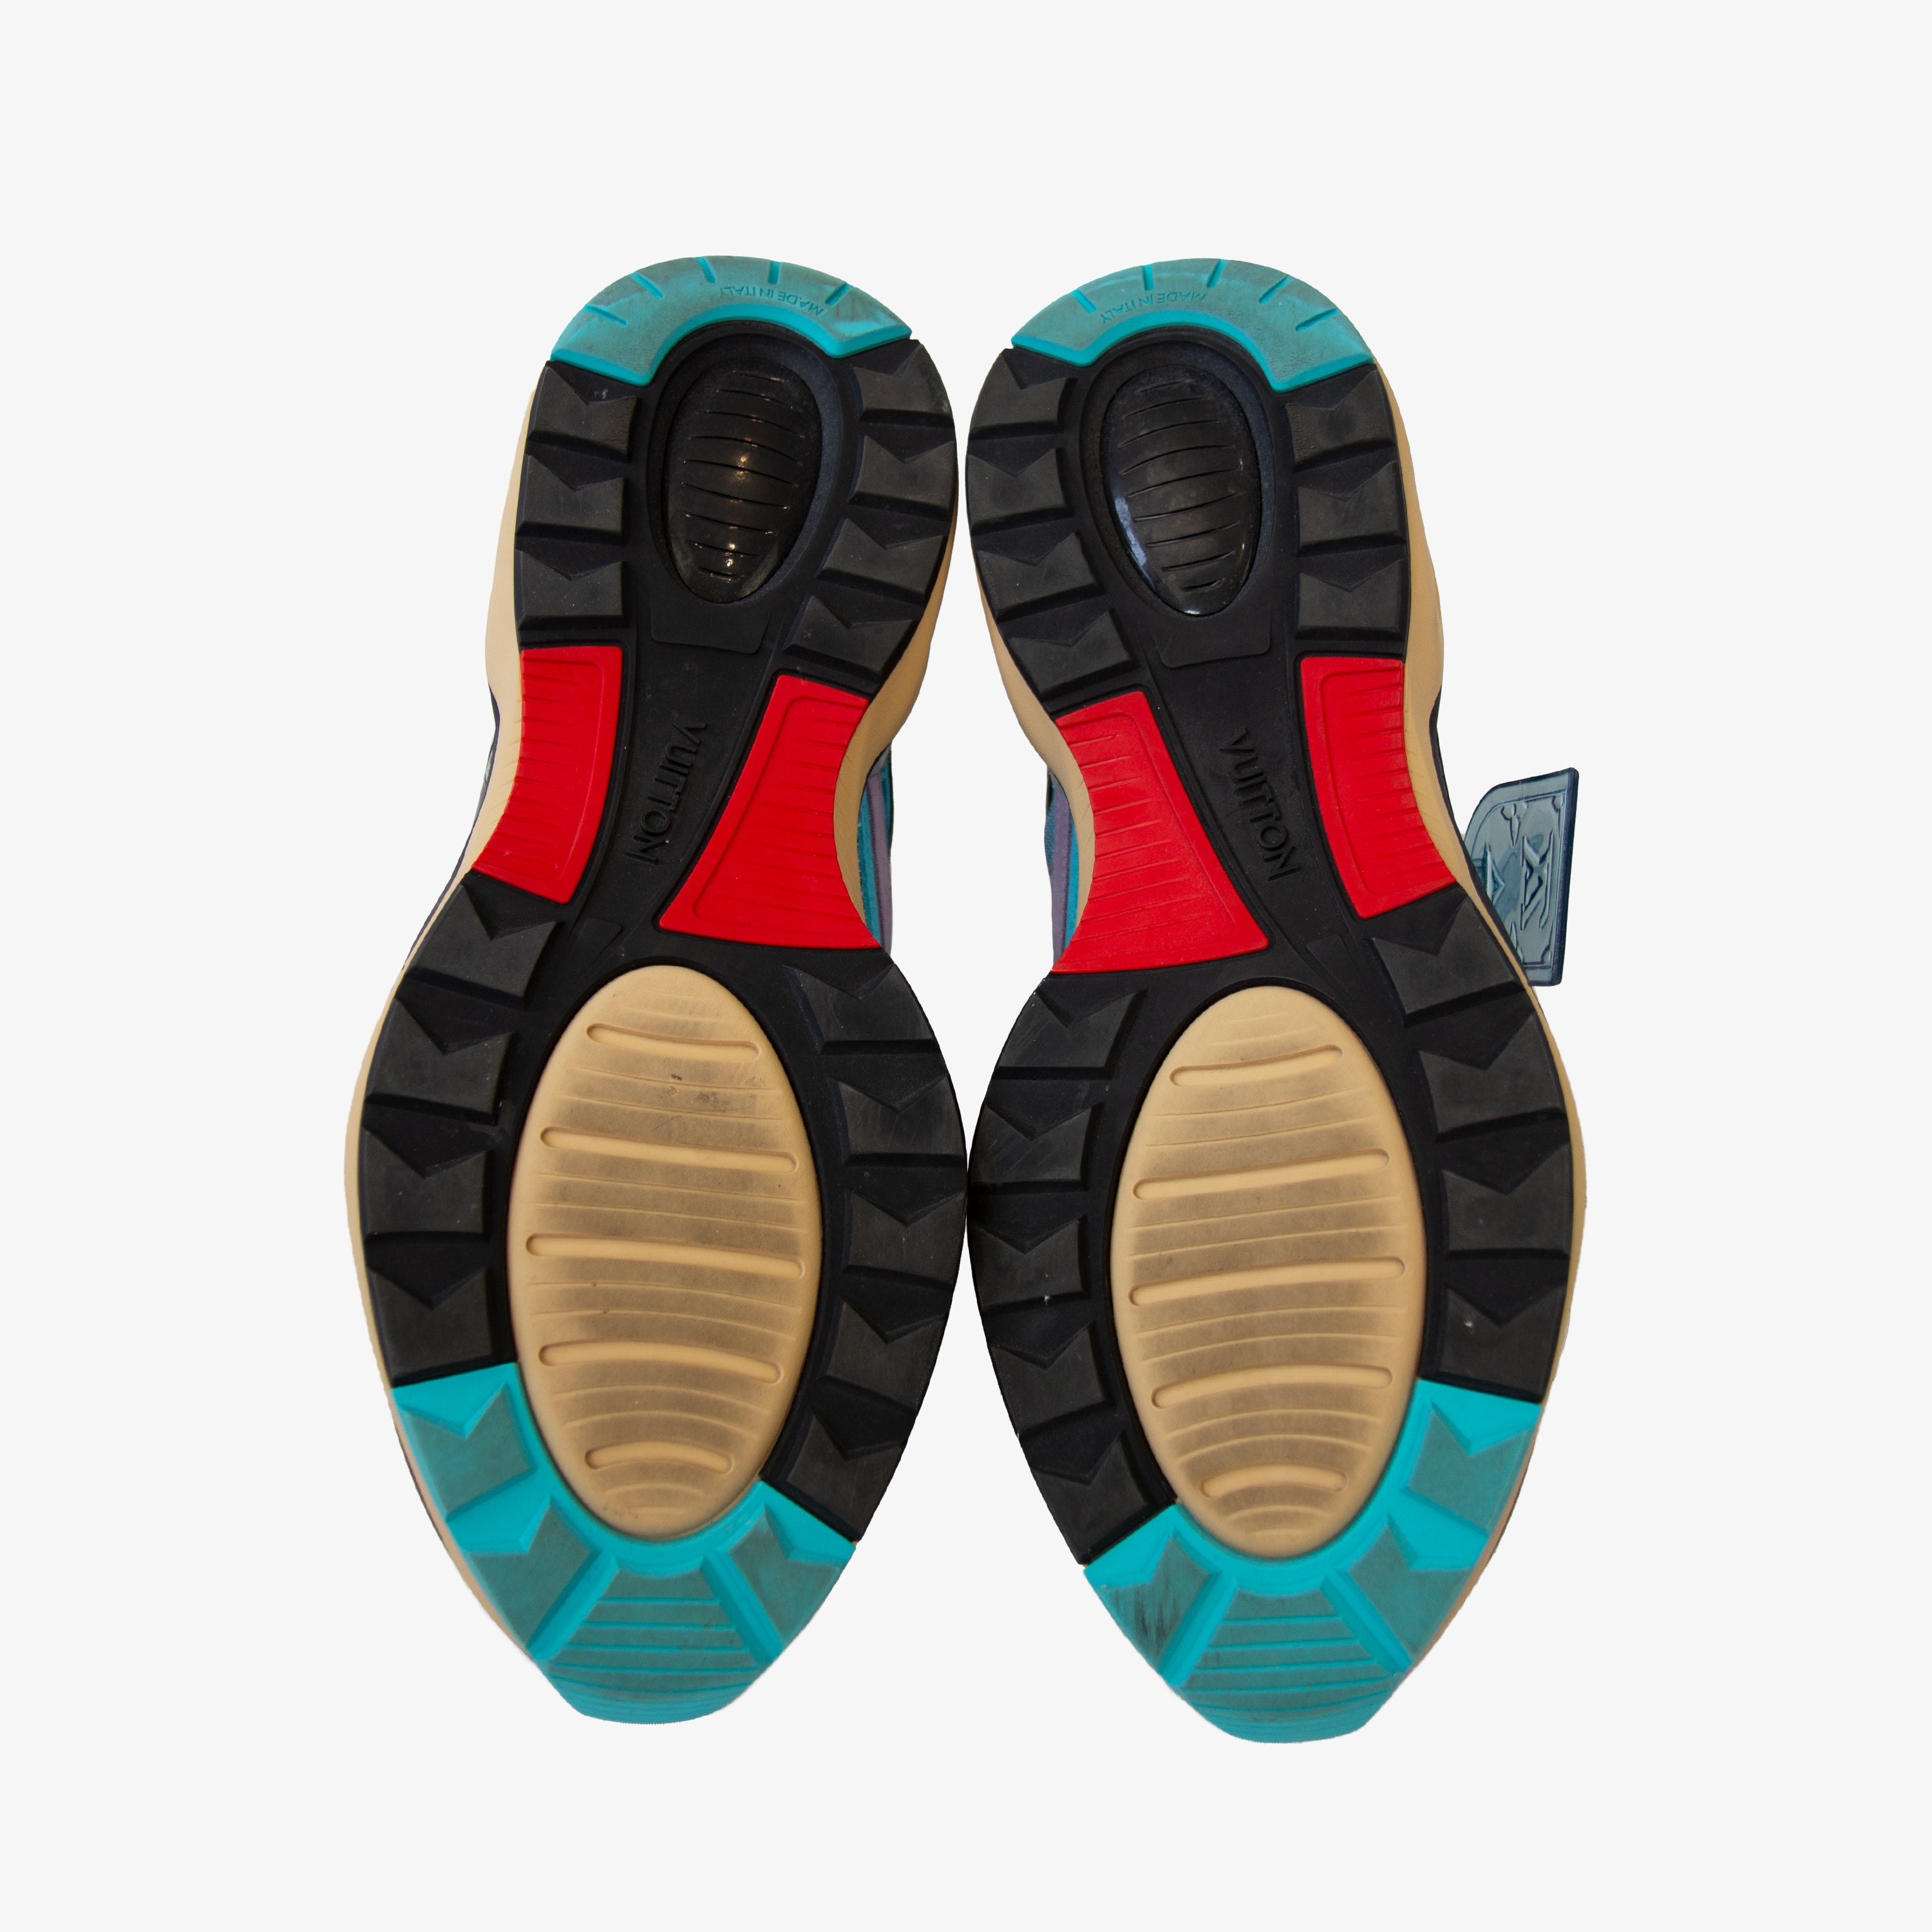 RepGod_Extreme - LV trail Sneaker Size: 38-44 Price: $160-$170